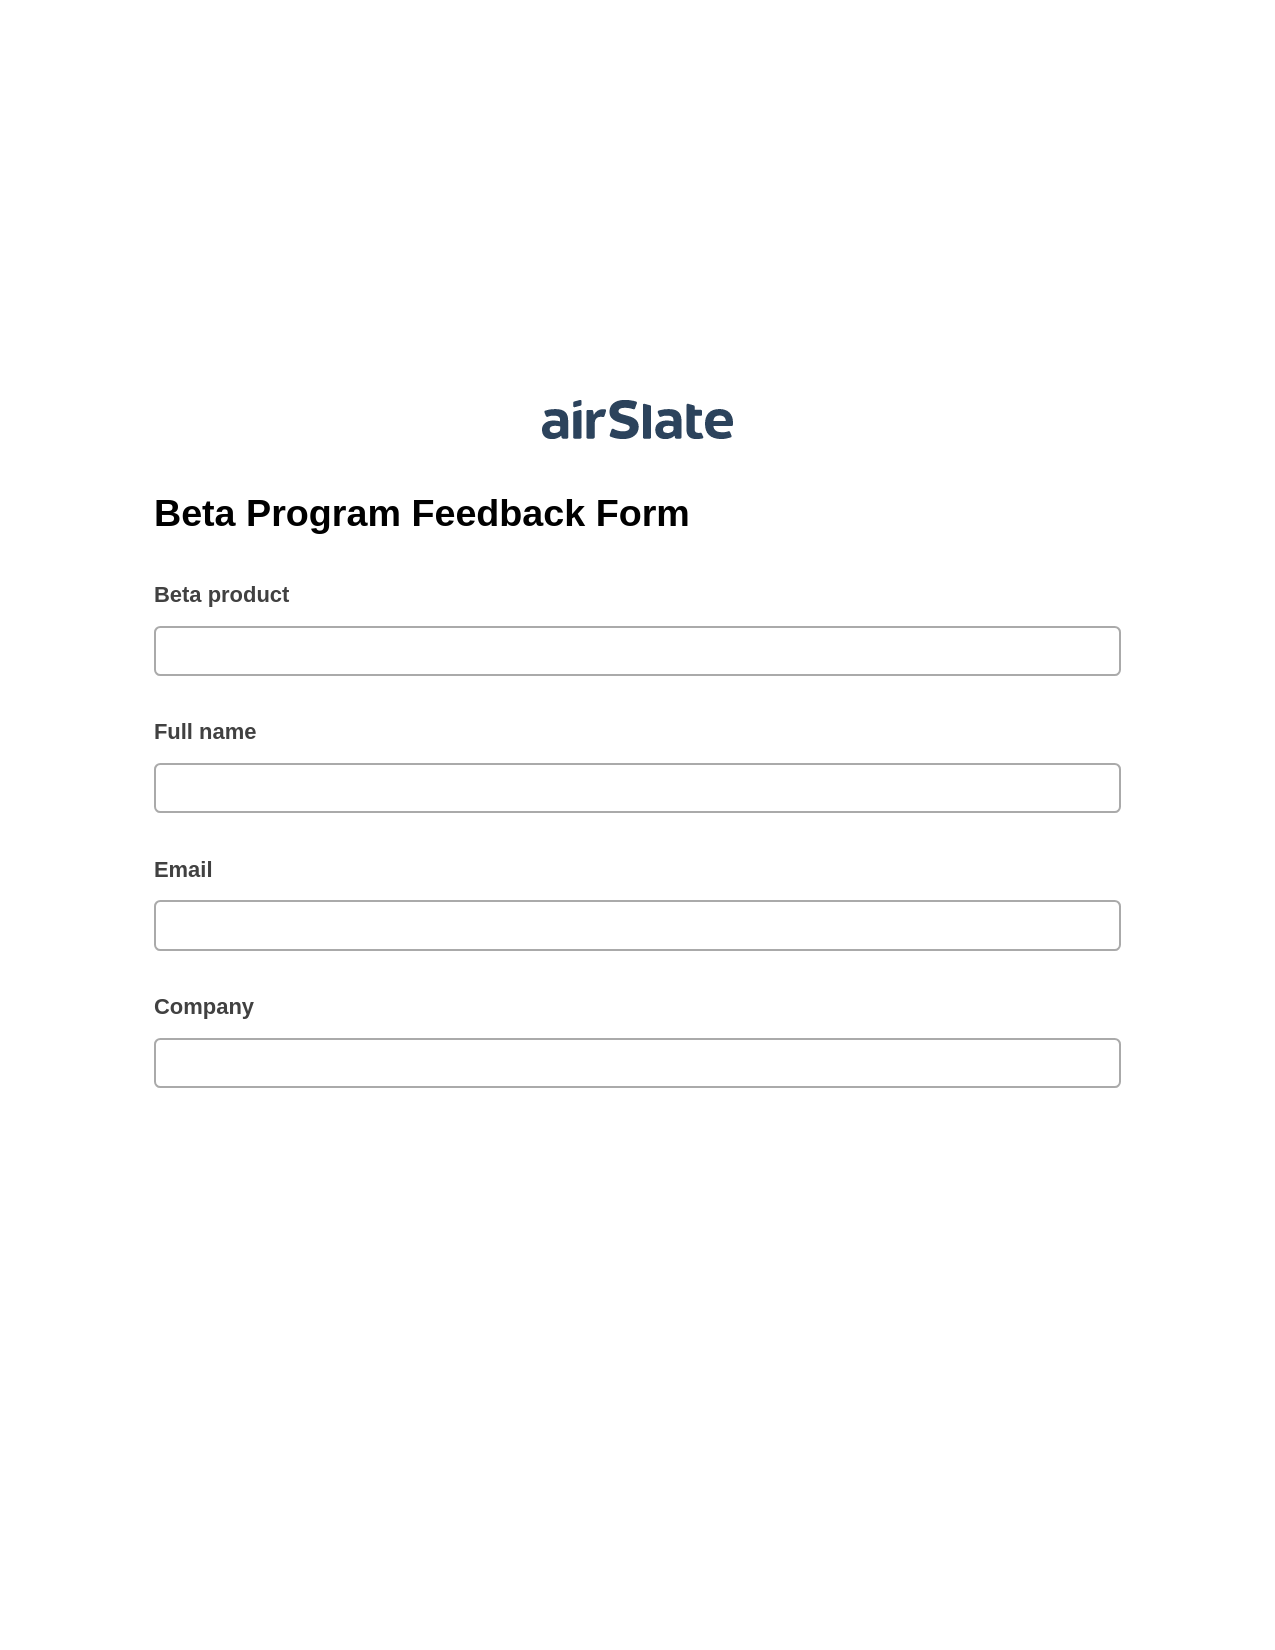 Multirole Beta Program Feedback Form Pre-fill Slate from MS Dynamics 365 Records Bot, Invoke Salesforce Process Bot, Box Bot